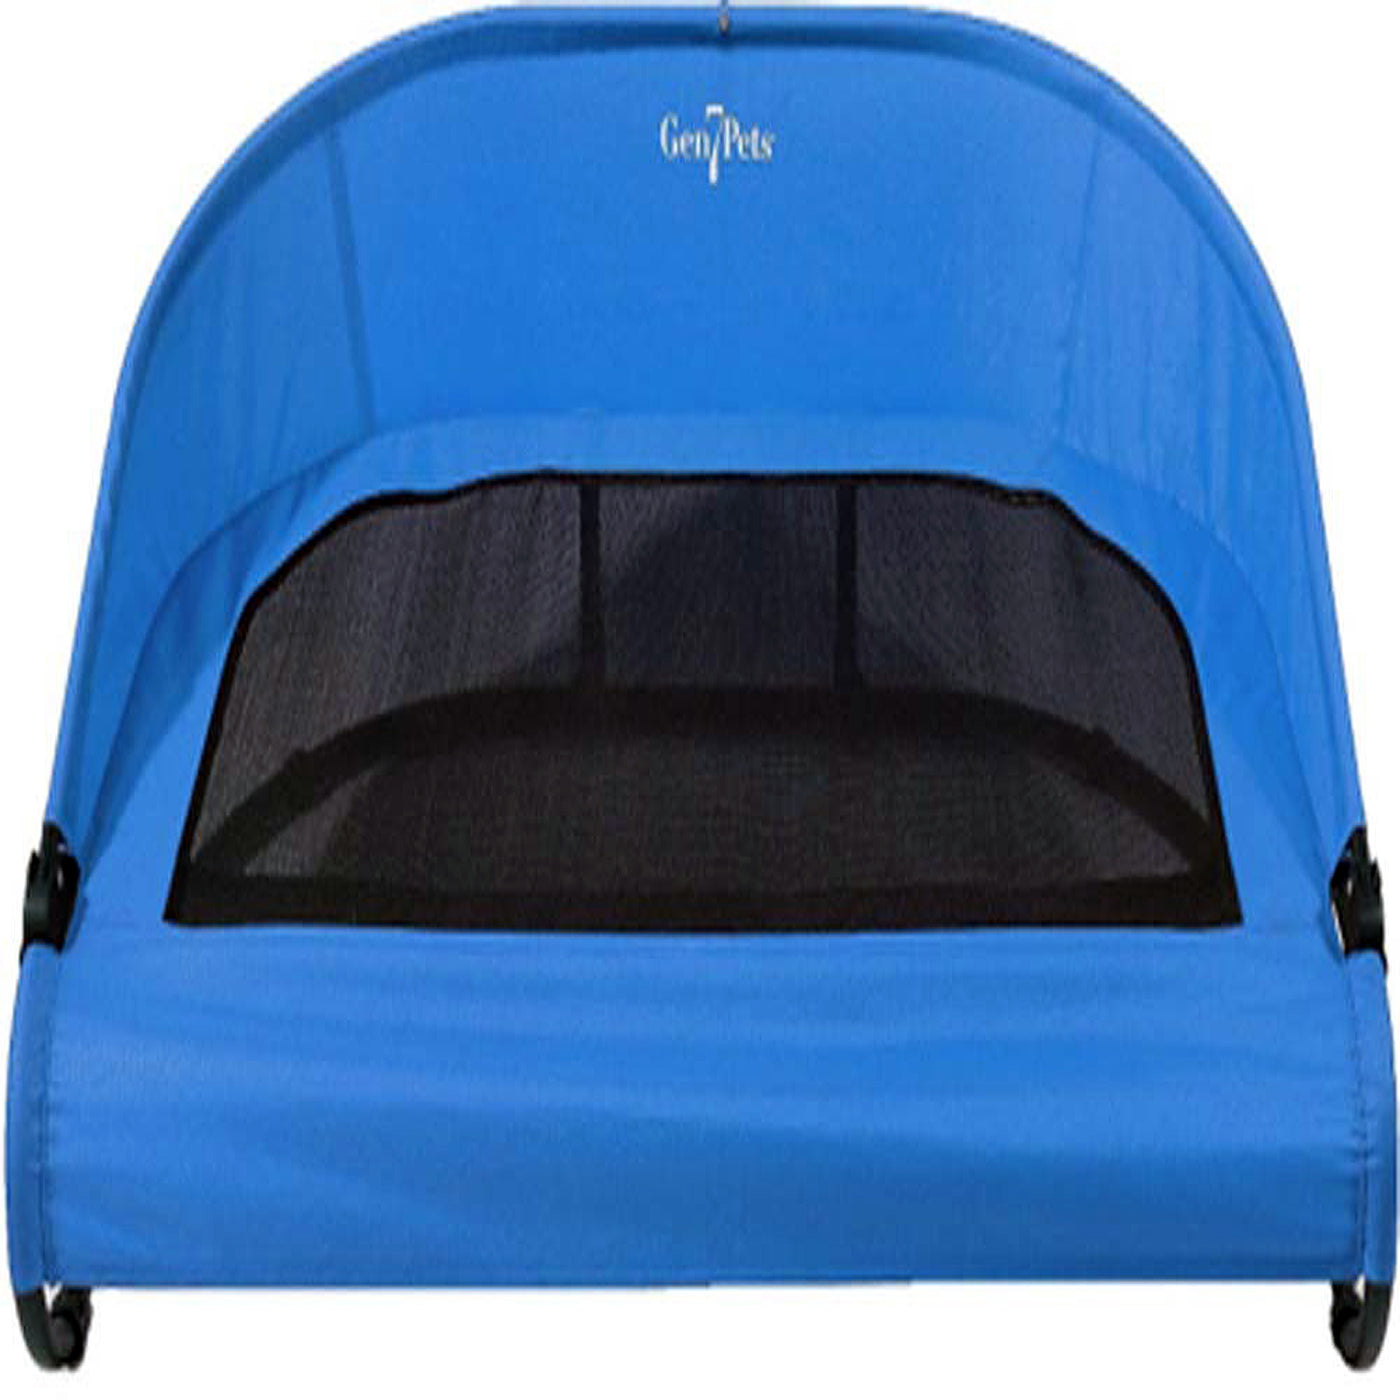 Gen7Pets Cool-Air Cot Dog Bed Trailblazer Blue Medium